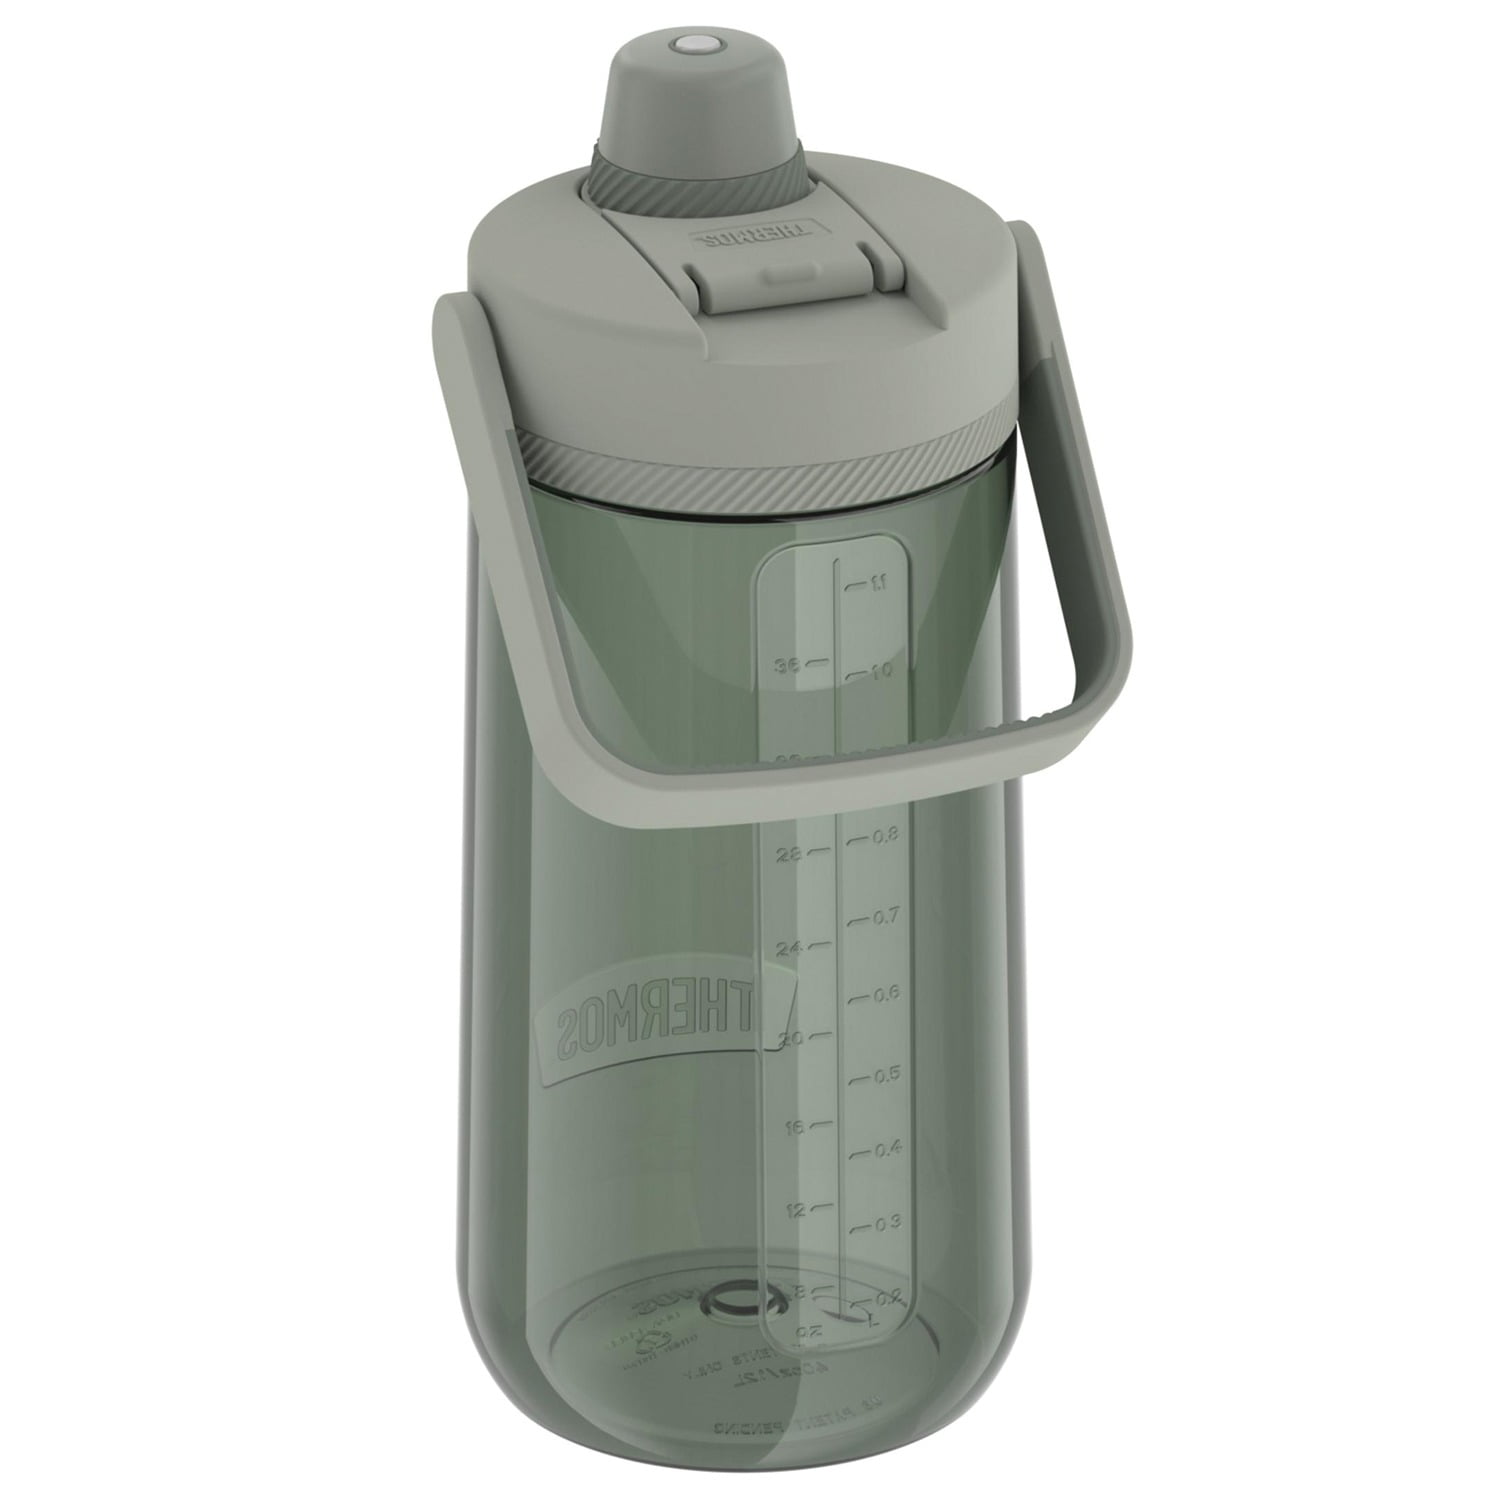 Insulated Water Bottle 24oz Honu Grey